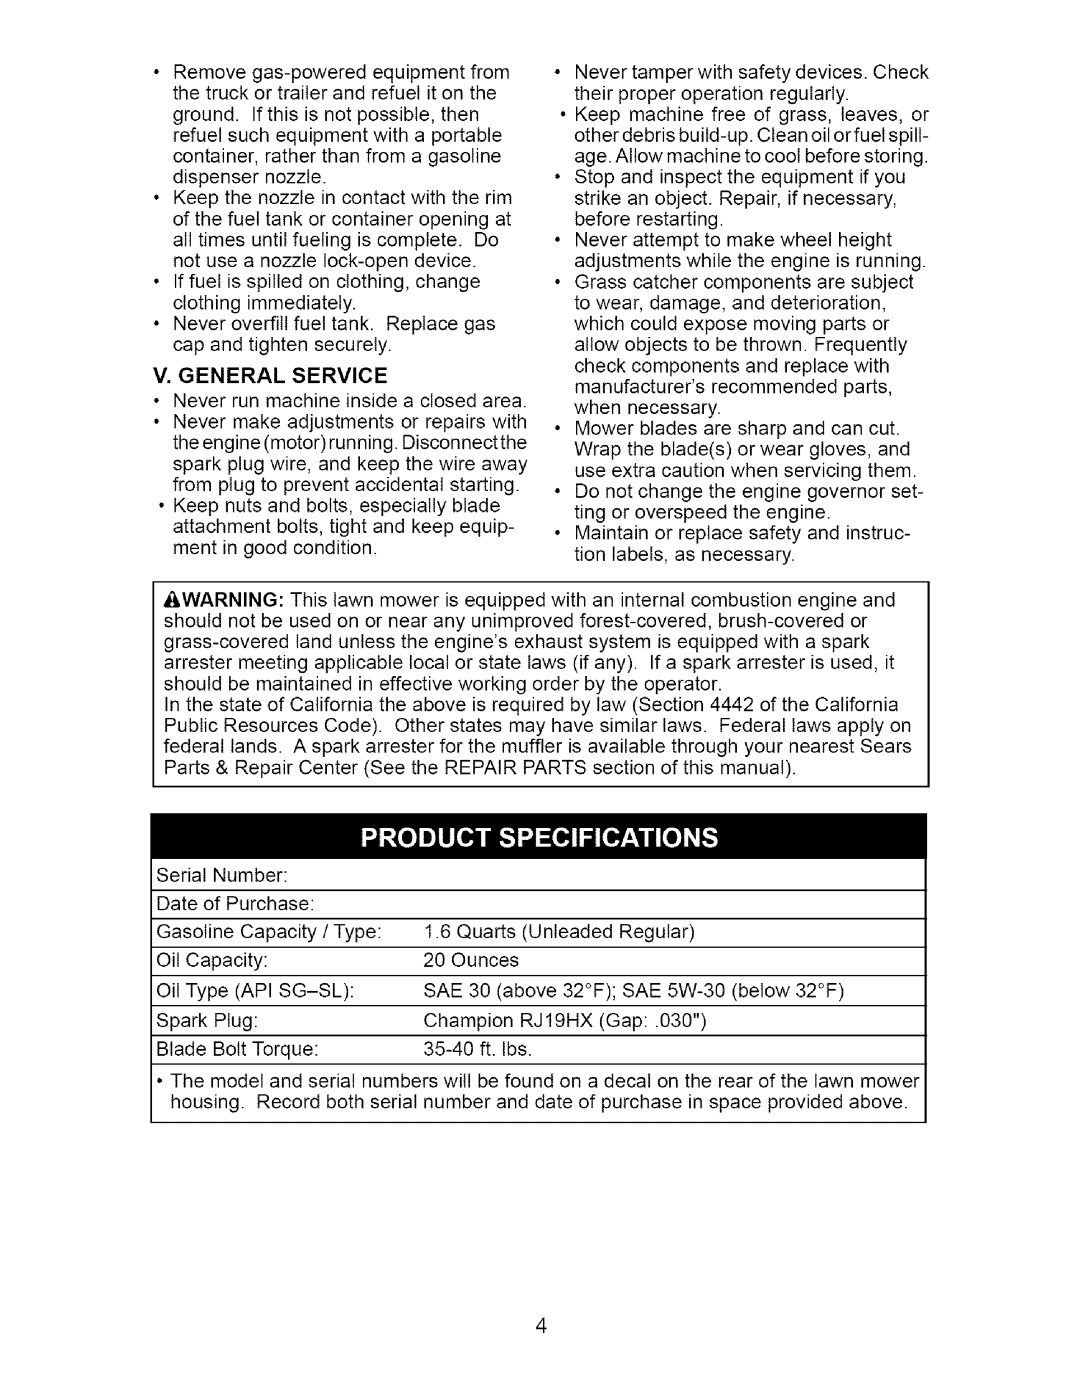 Craftsman 917.377011 owner manual V. General Service, GasolineCapacity/ Type 